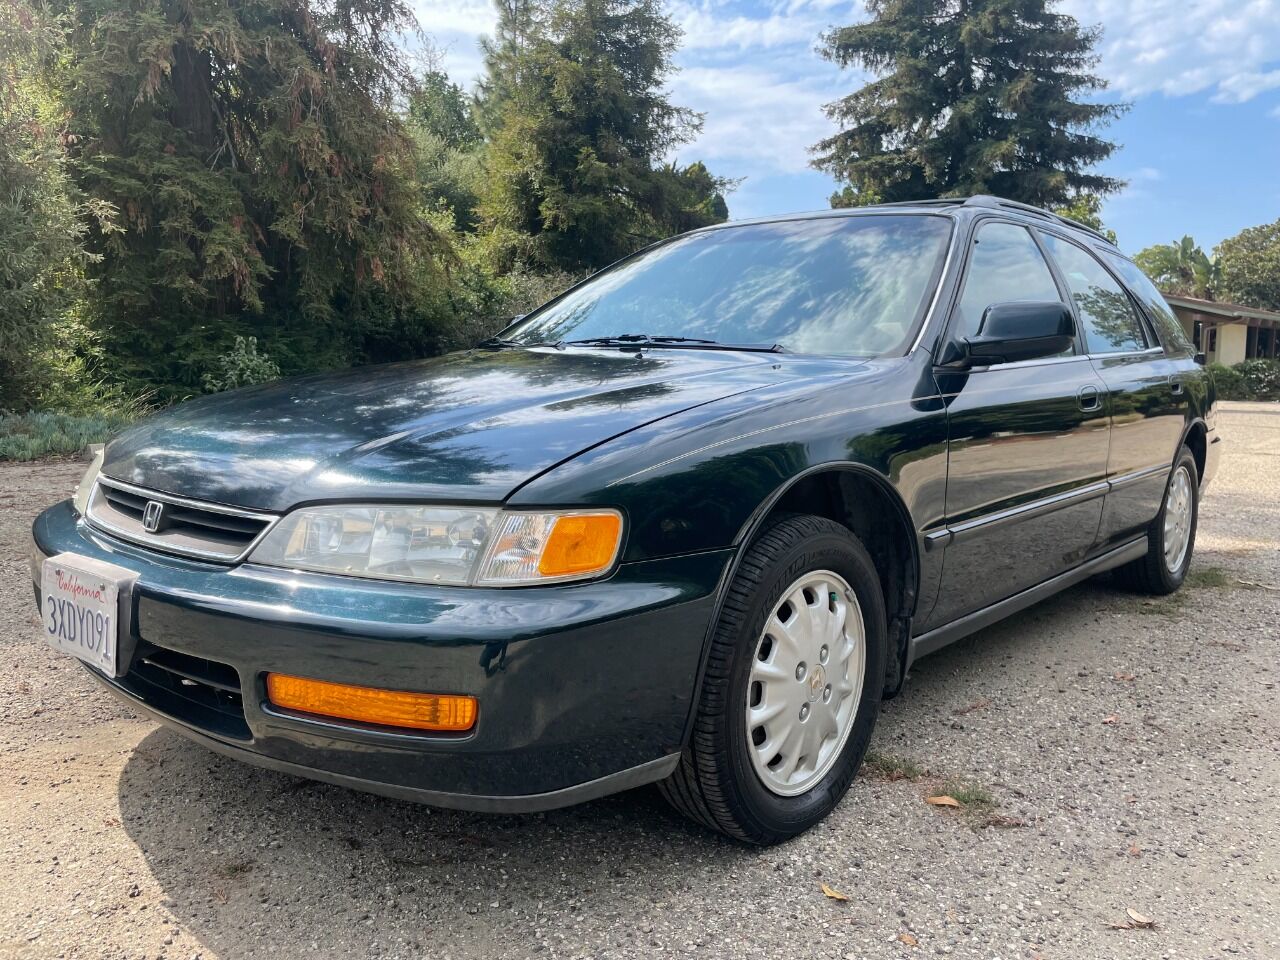 1997 Honda Accord For Sale - Carsforsale.com®